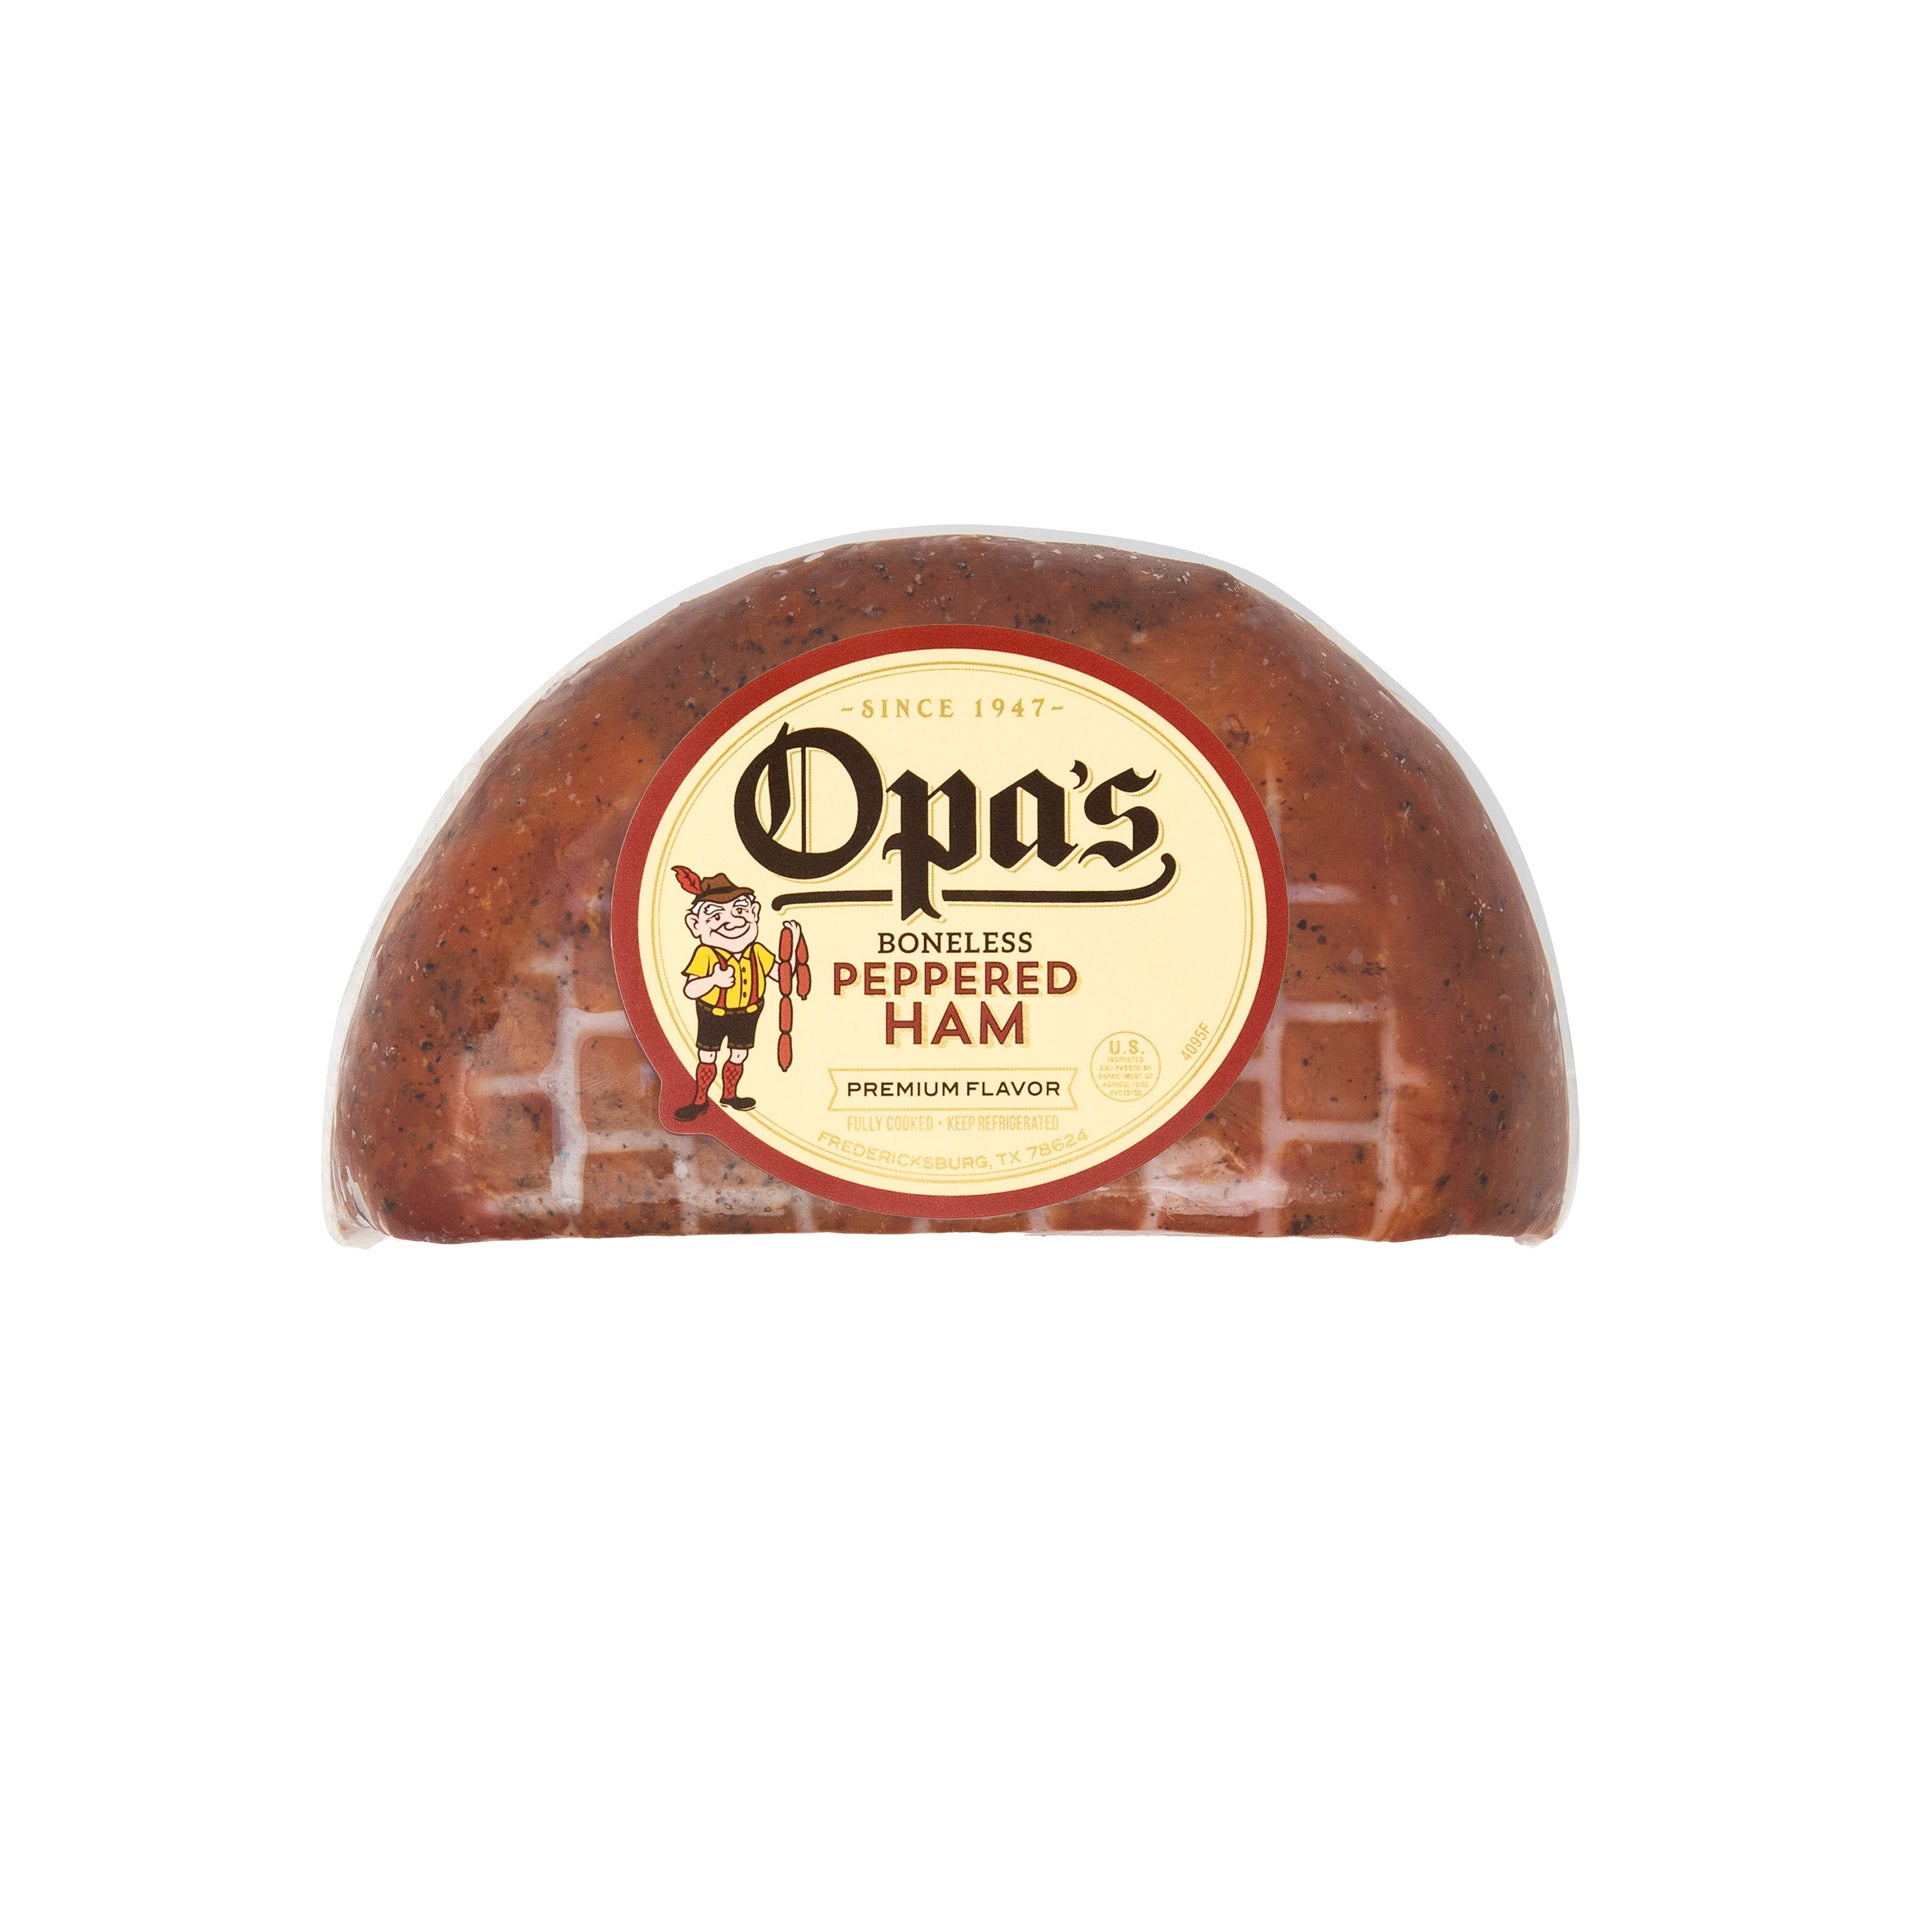 Opa’s Boneless Peppered Hams